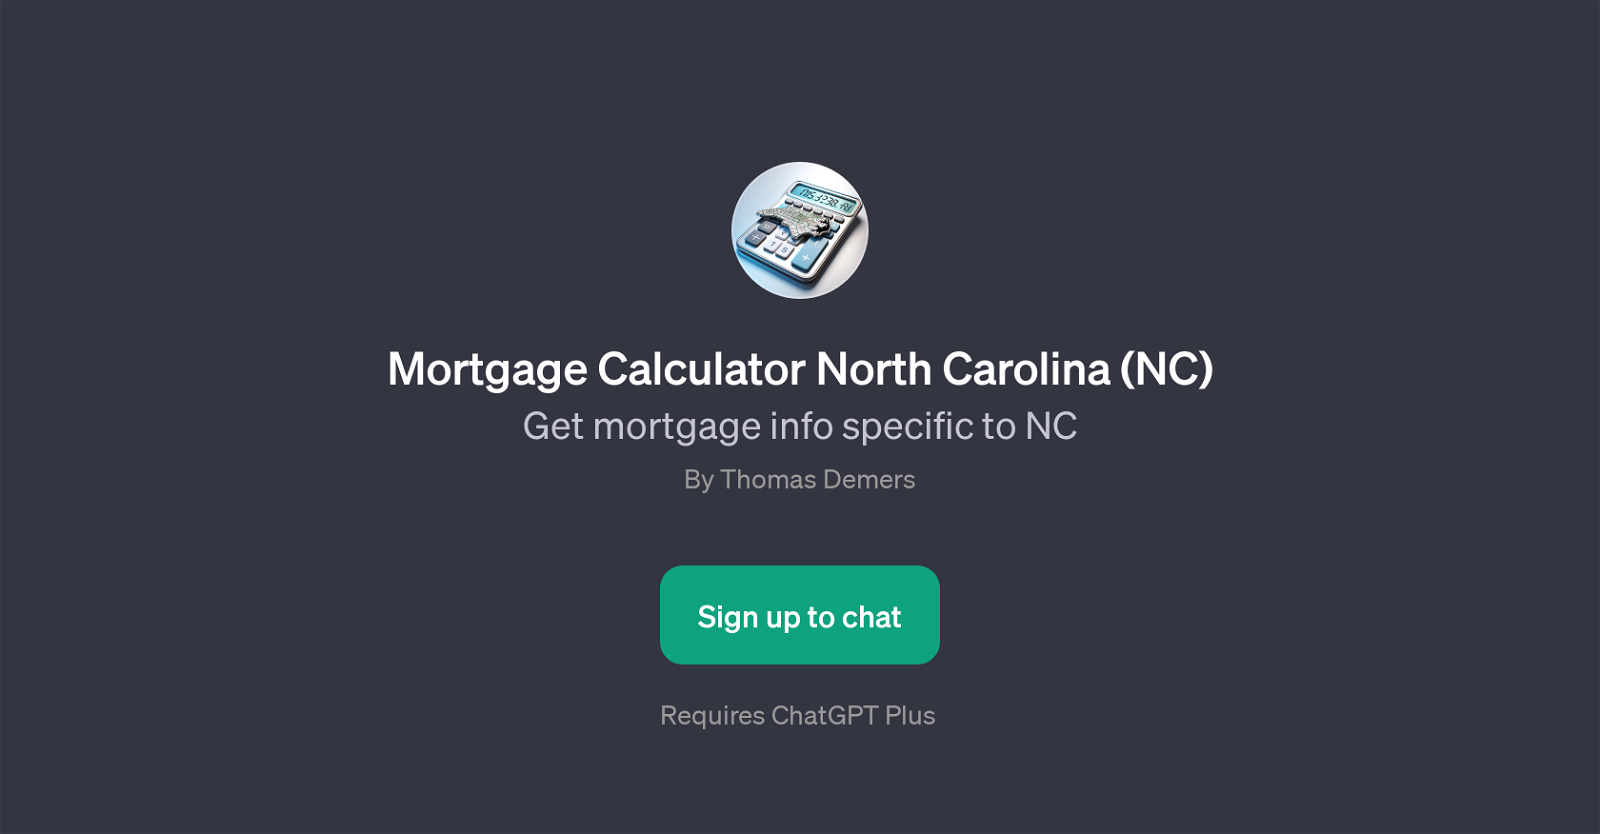 Mortgage Calculator North Carolina (NC) website